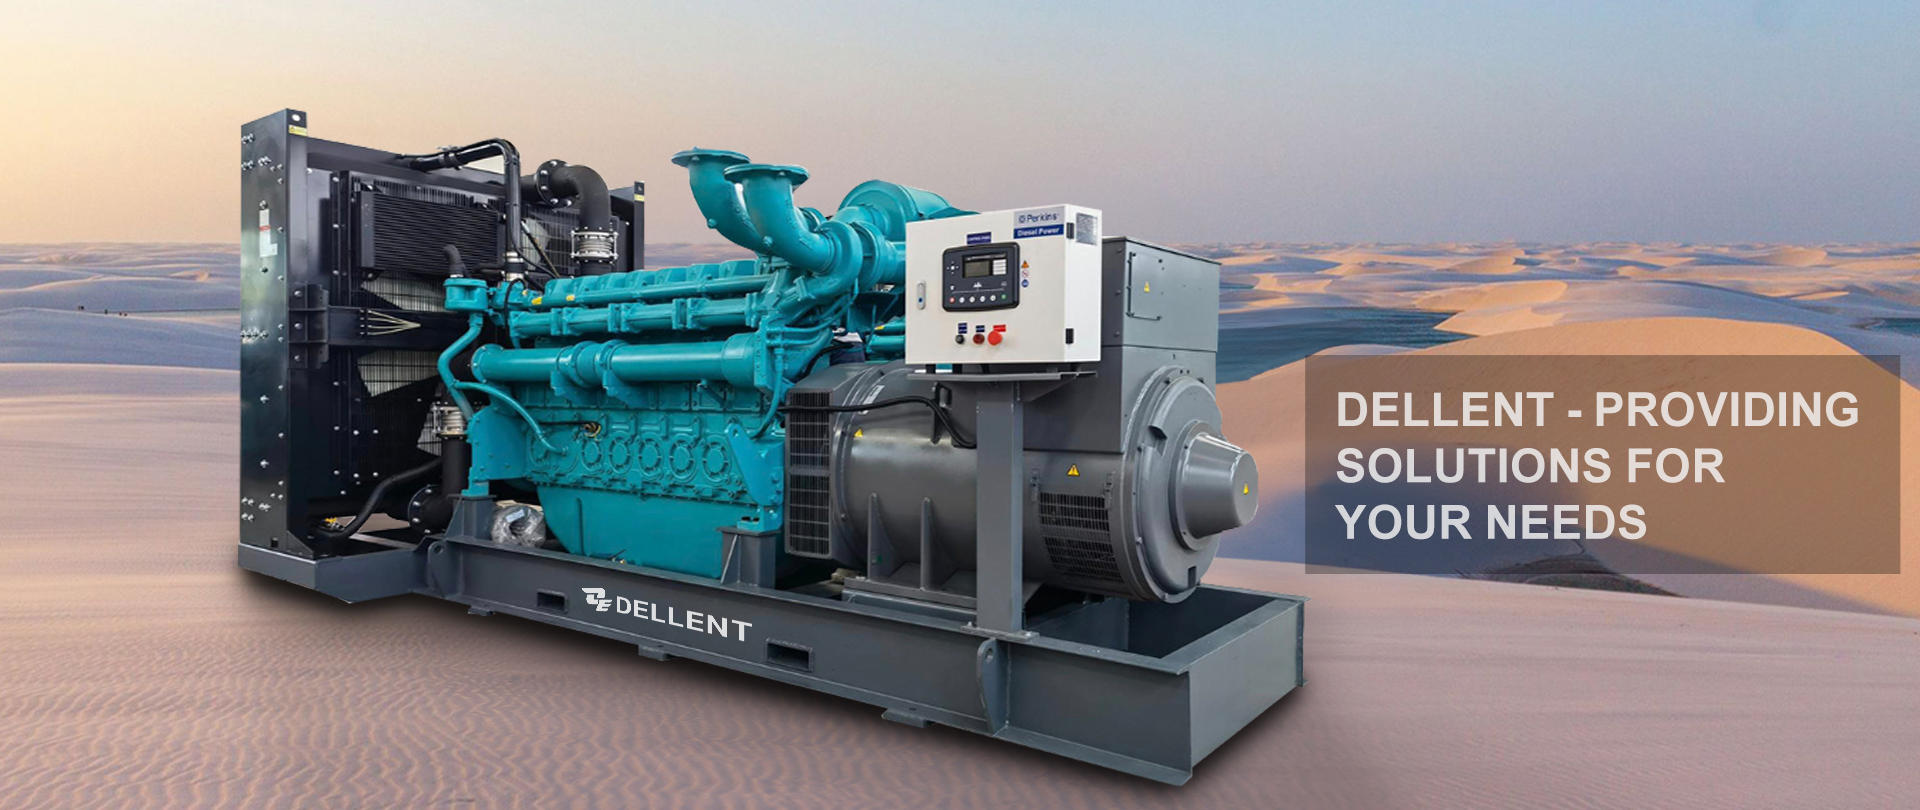 dellent-diesel-generator-home-banner04.jpg